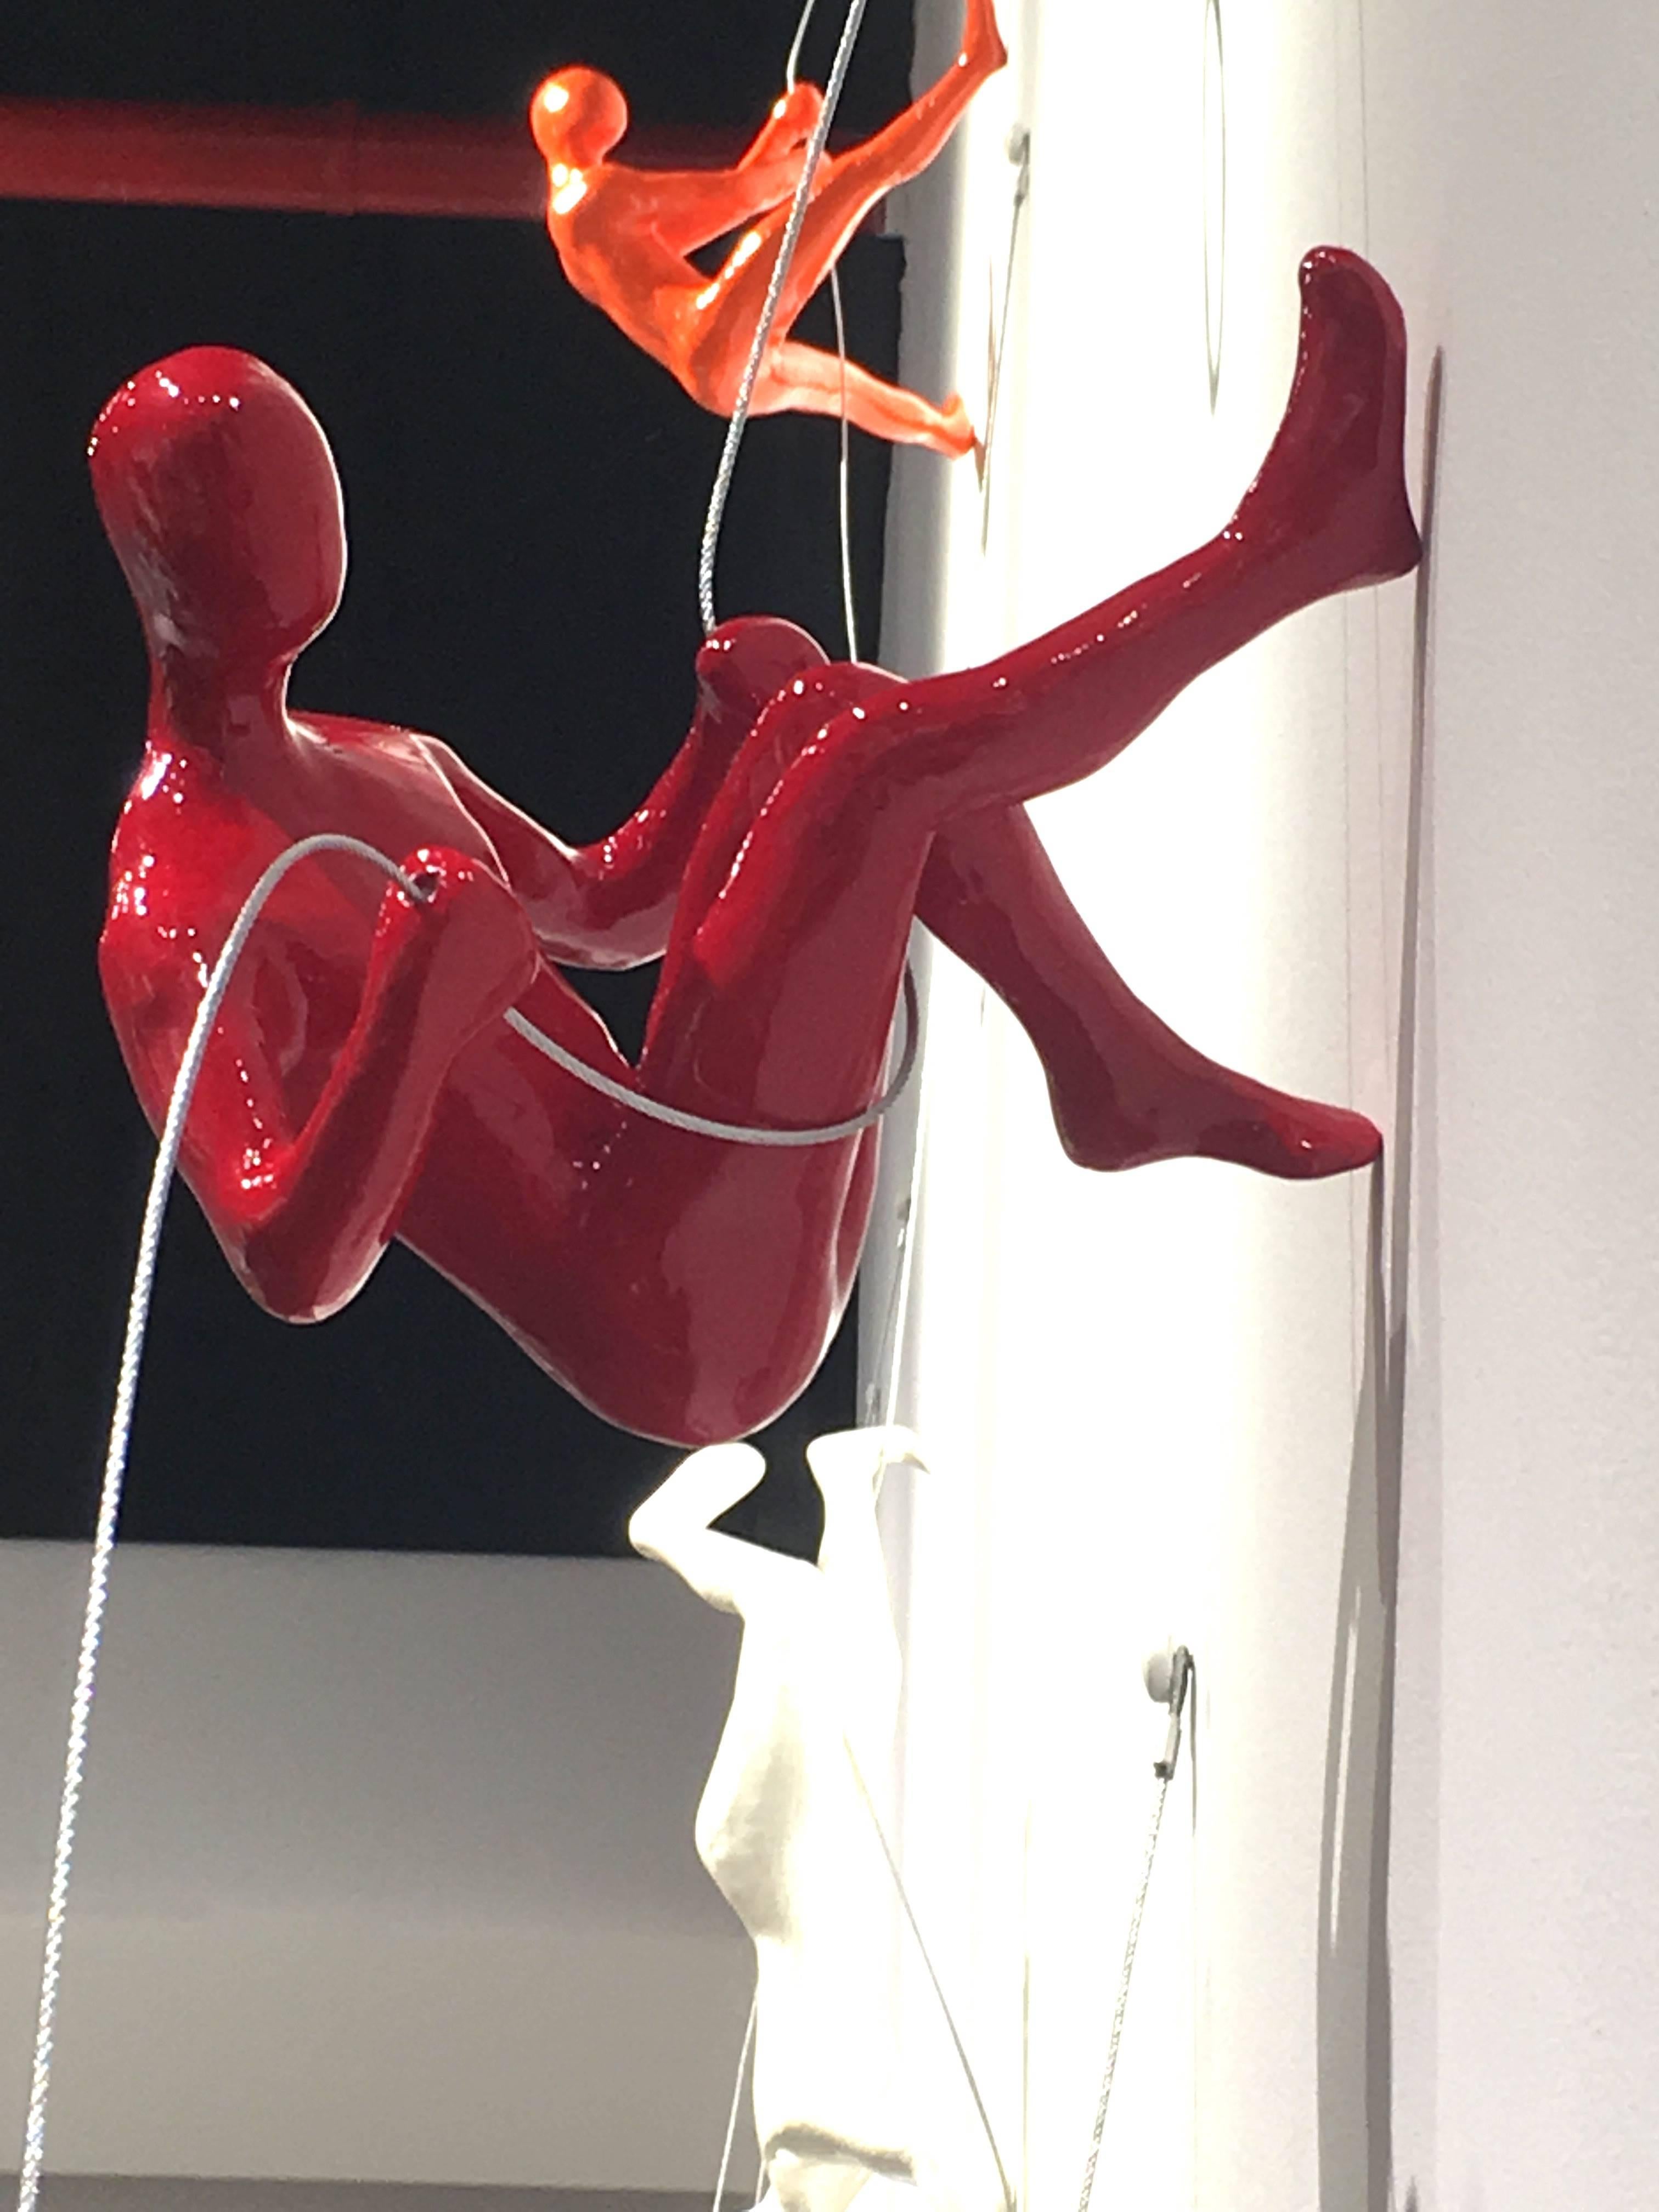 Ancizar Marin Figurative Sculpture - Red Climber